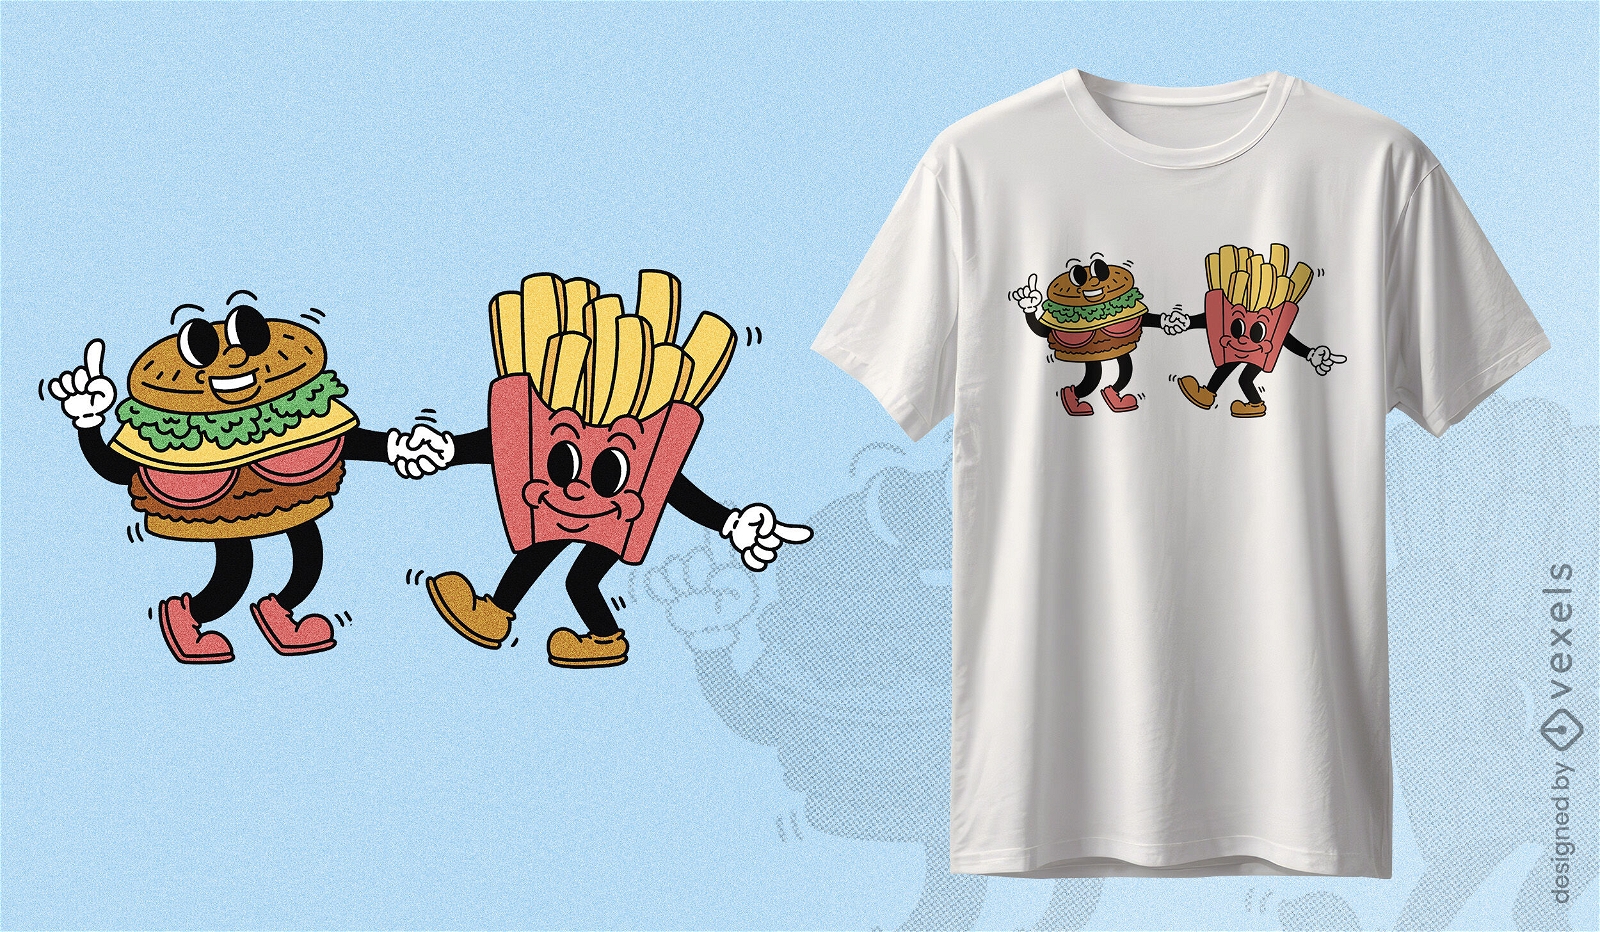 Fast food characters t-shirt design